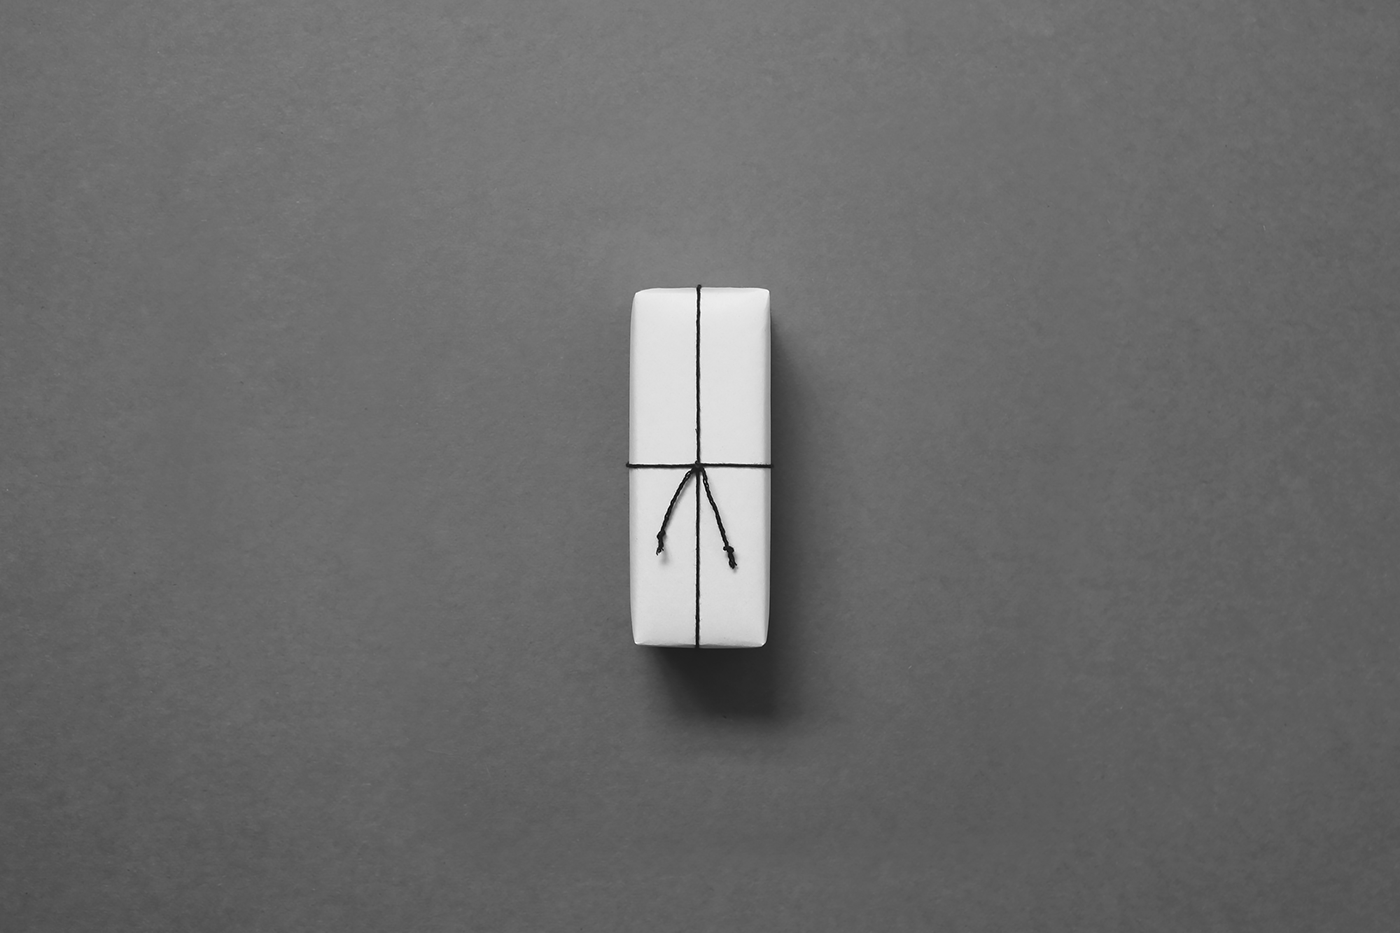 packing innoise jerry luk Matches Packing Design gray box black white Hong Kong Visual identiy